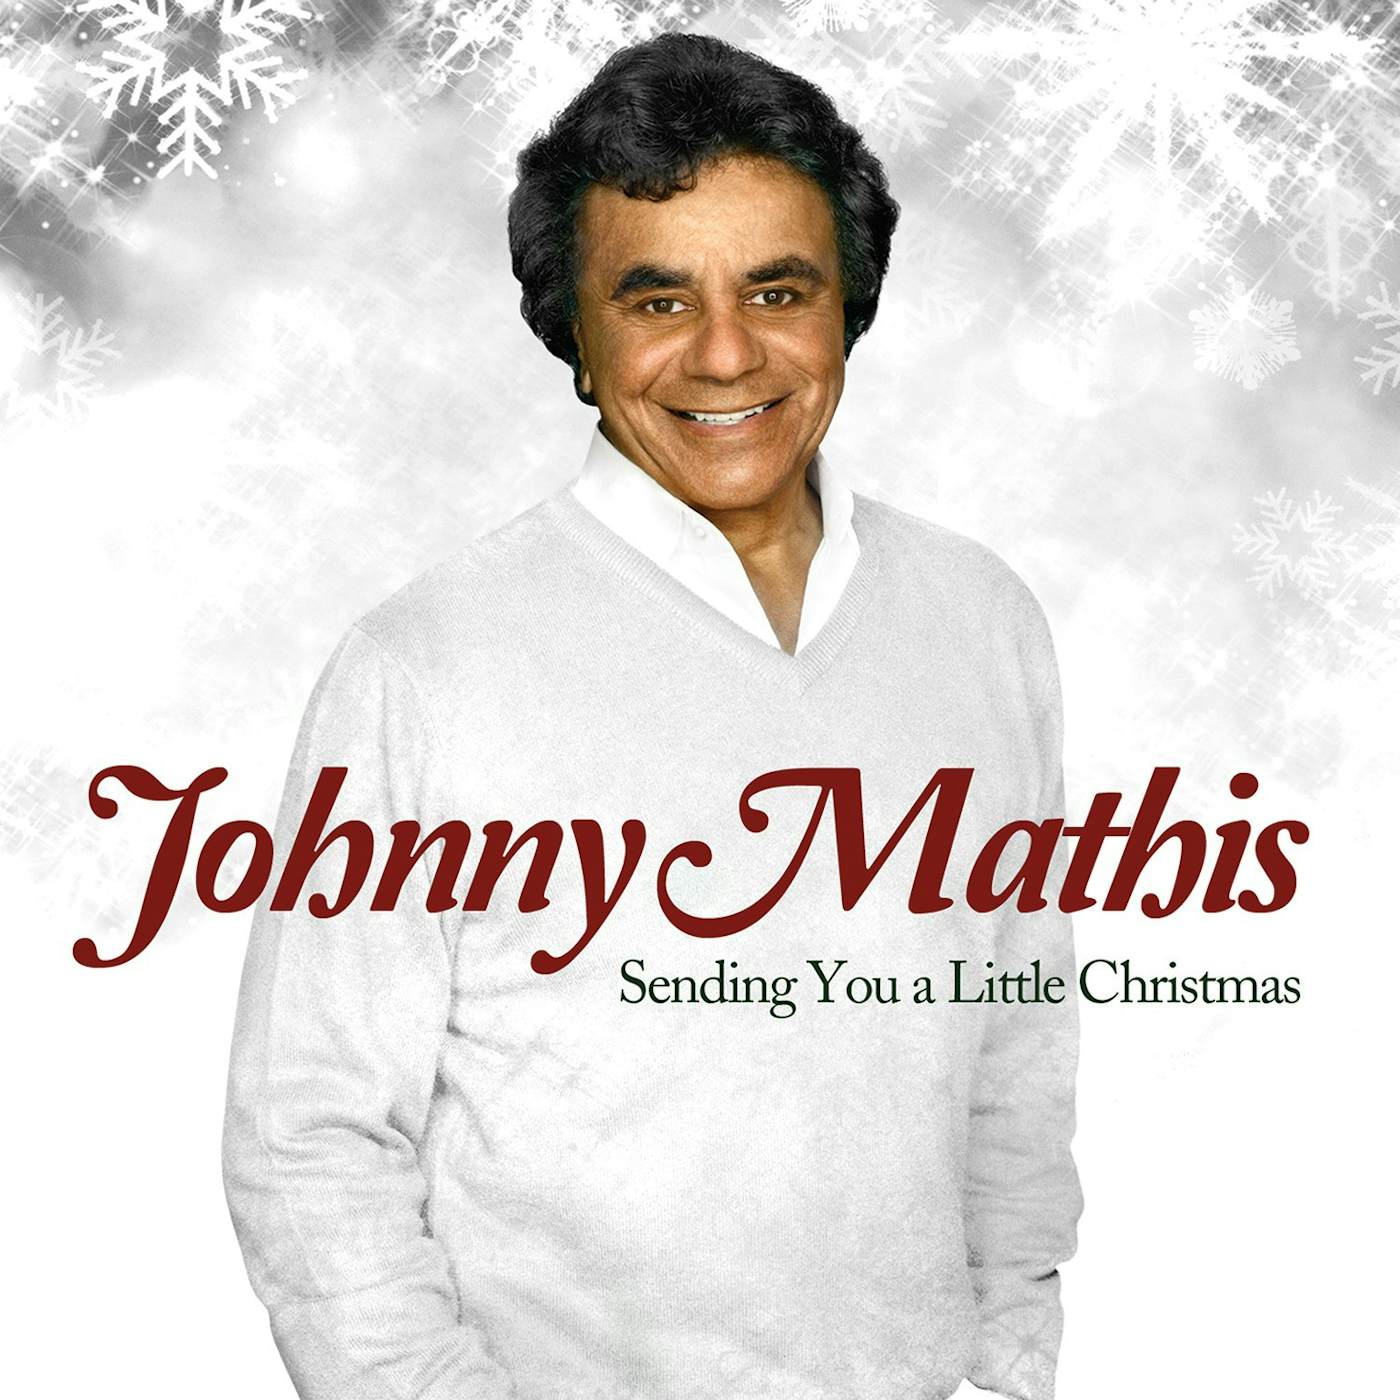 Johnny Mathis Sending You a Little Christmas Vinyl Record